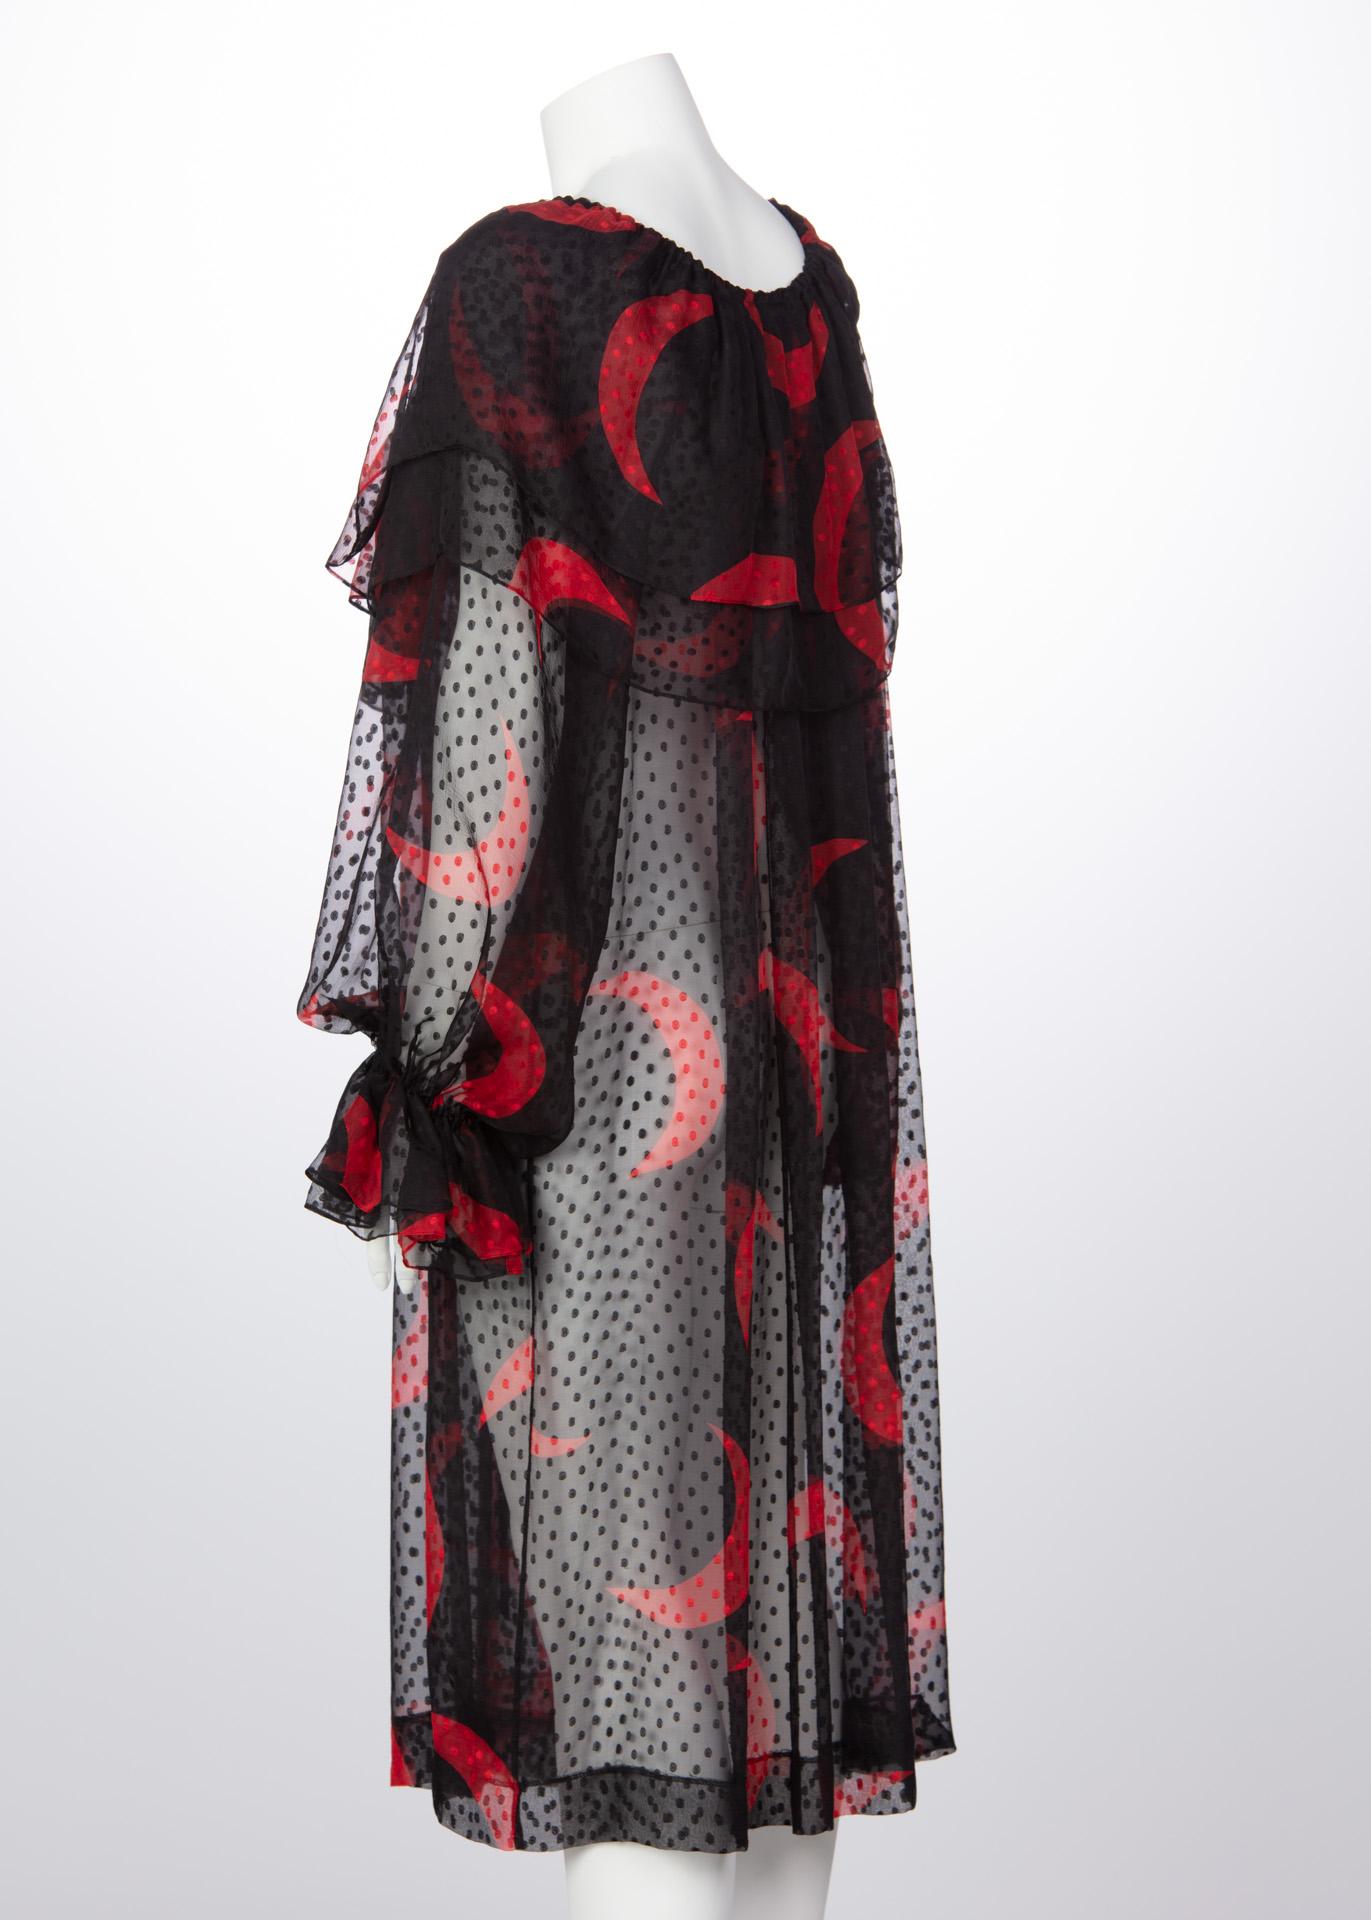 Women's 1970s Yves Saint Laurent Red & Black Crescent Moon Ruffle Peasant Dress 